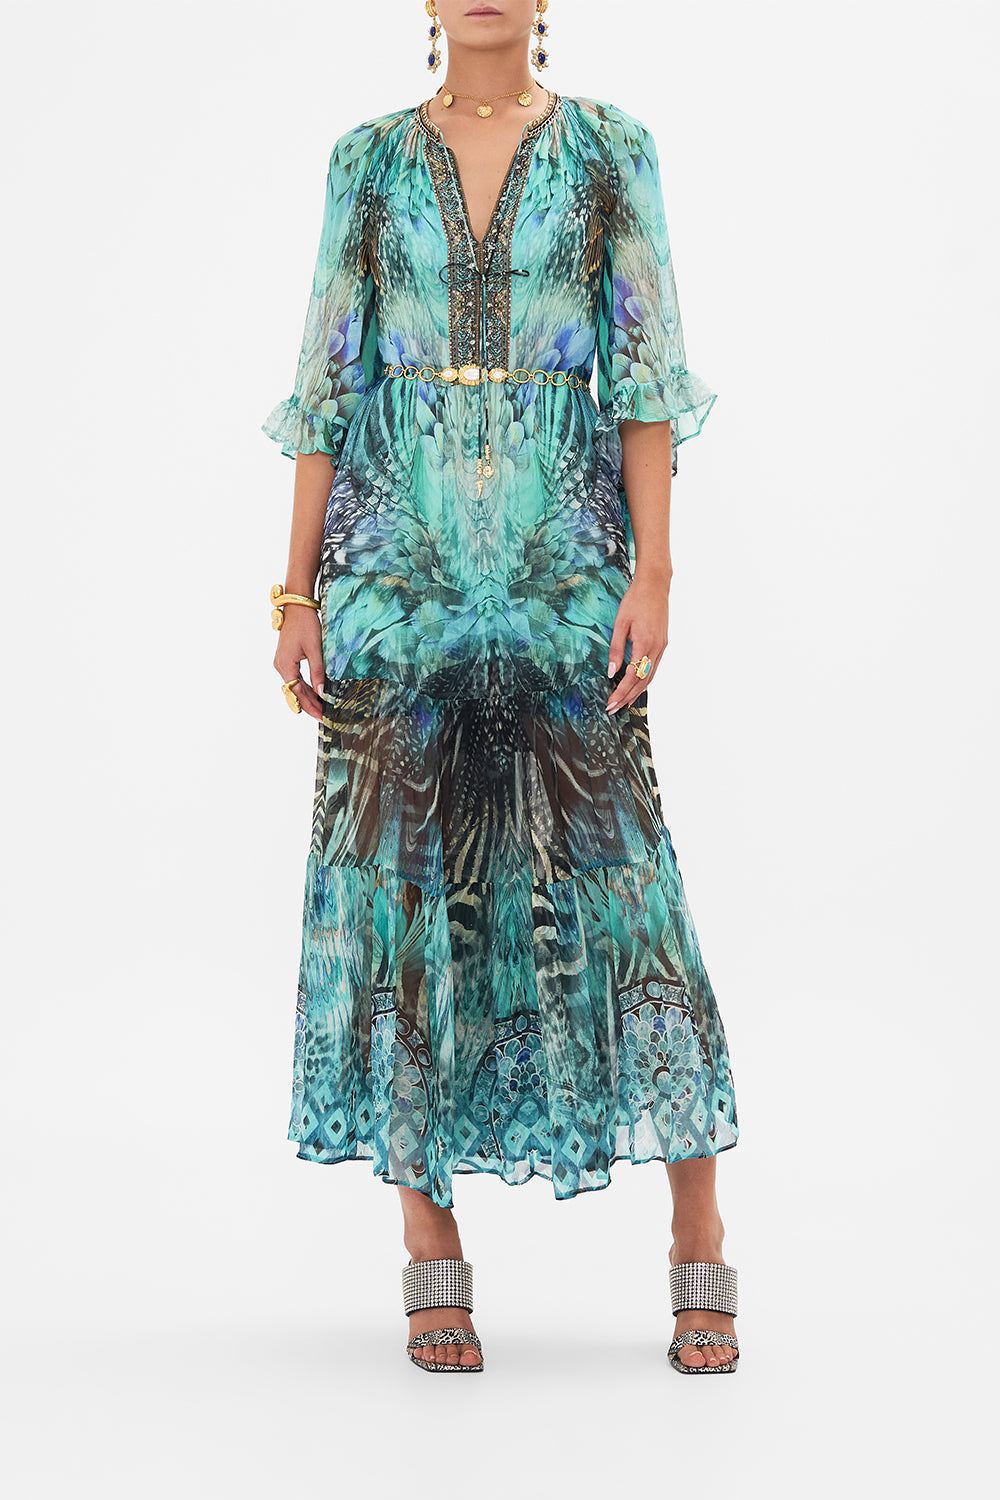 Style view of model wearing CAMILLA silk dress in Azure Allure